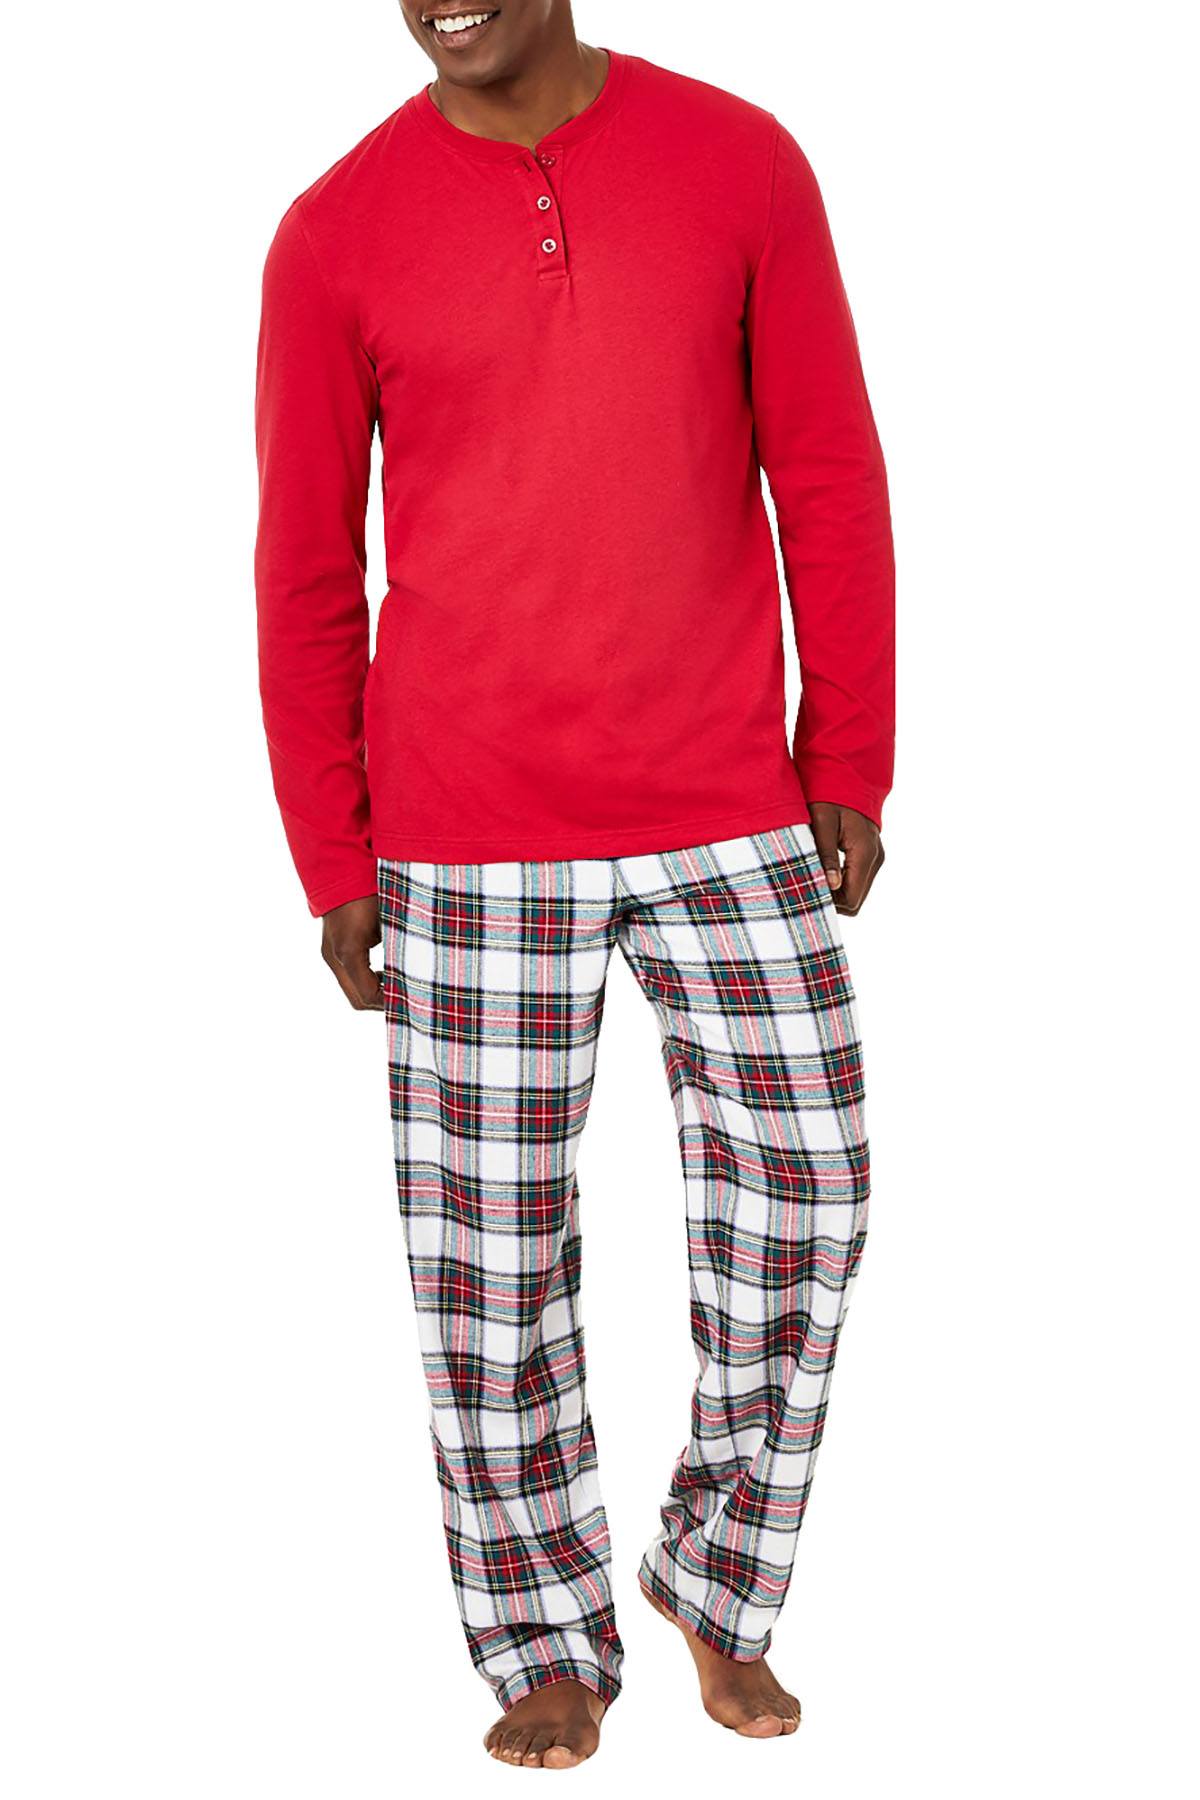 Family Pajamas Matching Men's Stewart Cotton Plaid Pajamas Set